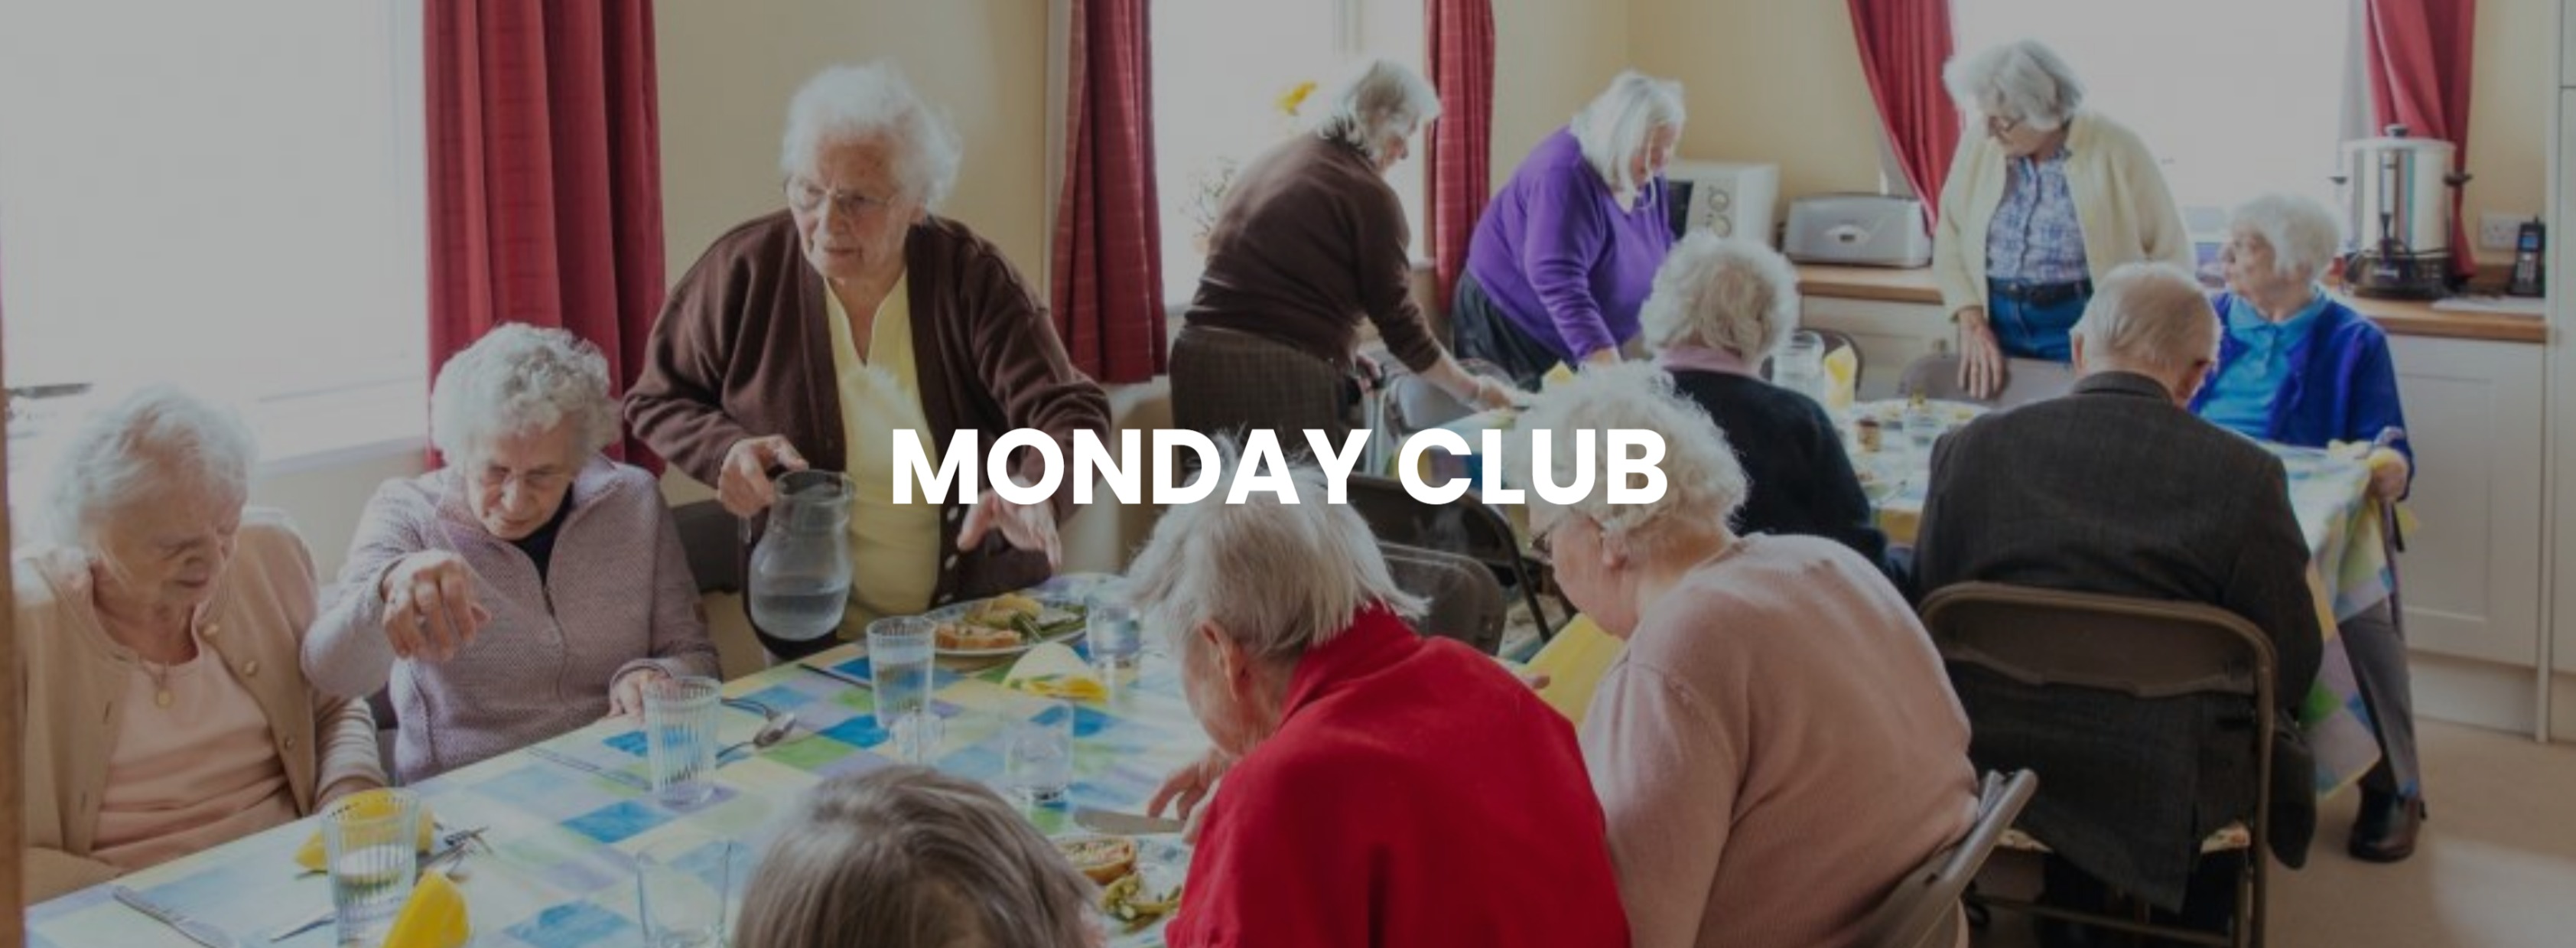 Southover Community Care - Monday Club logo